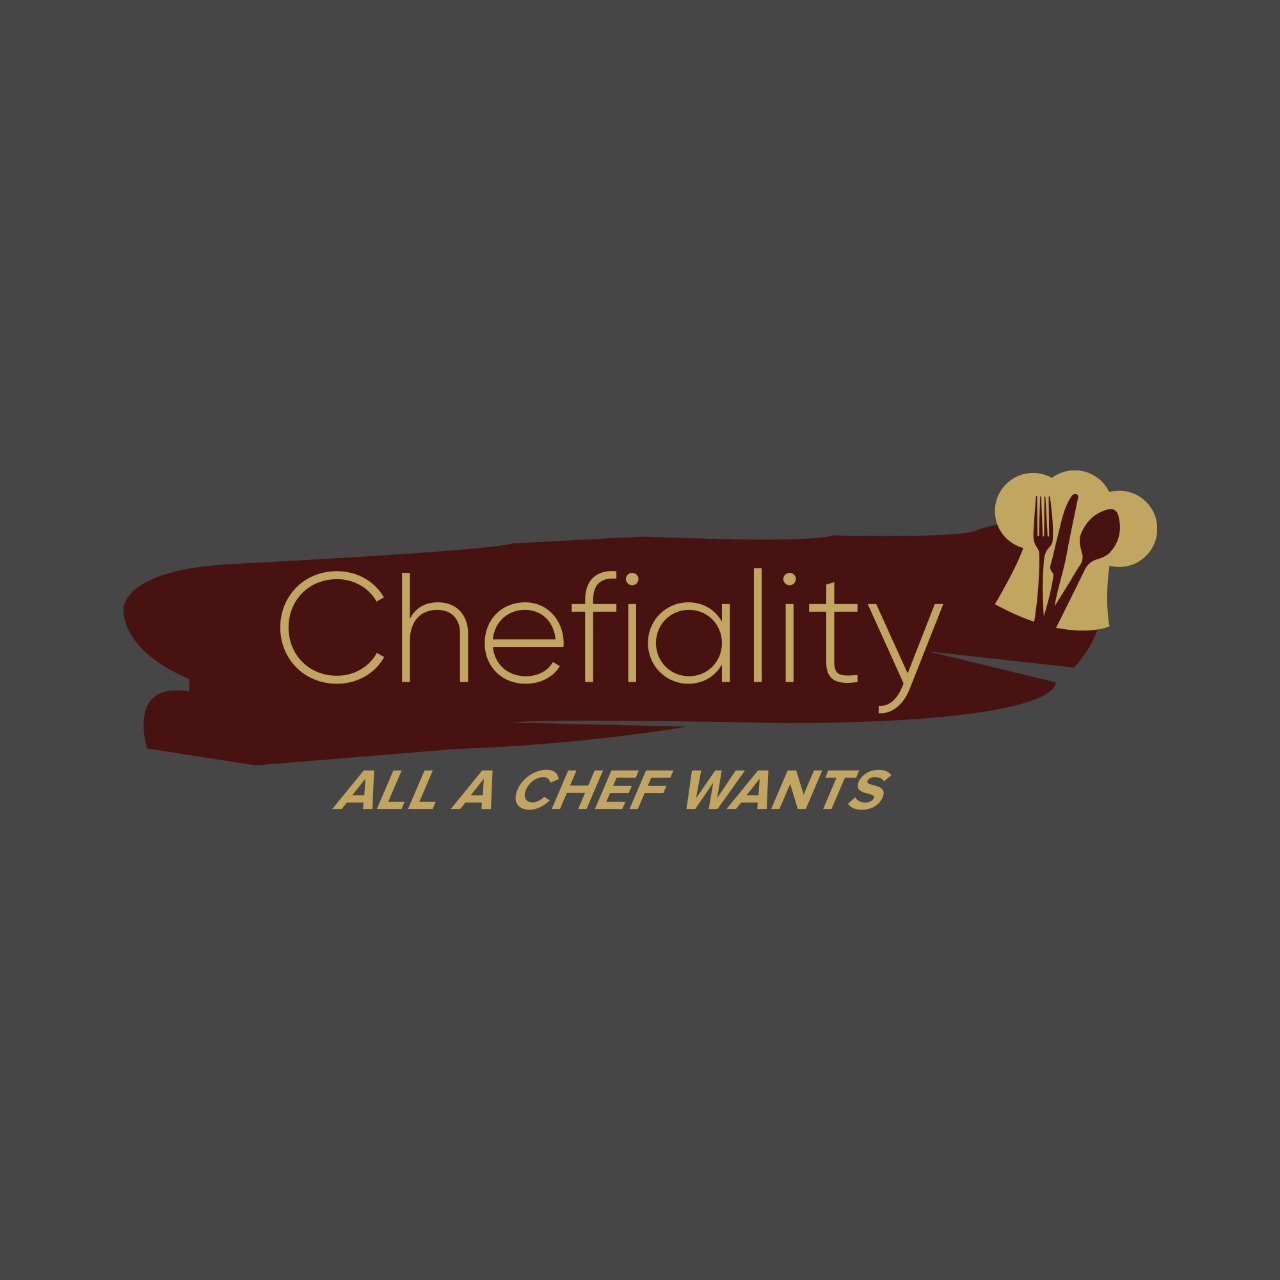 Chefiality Essence & Flavour